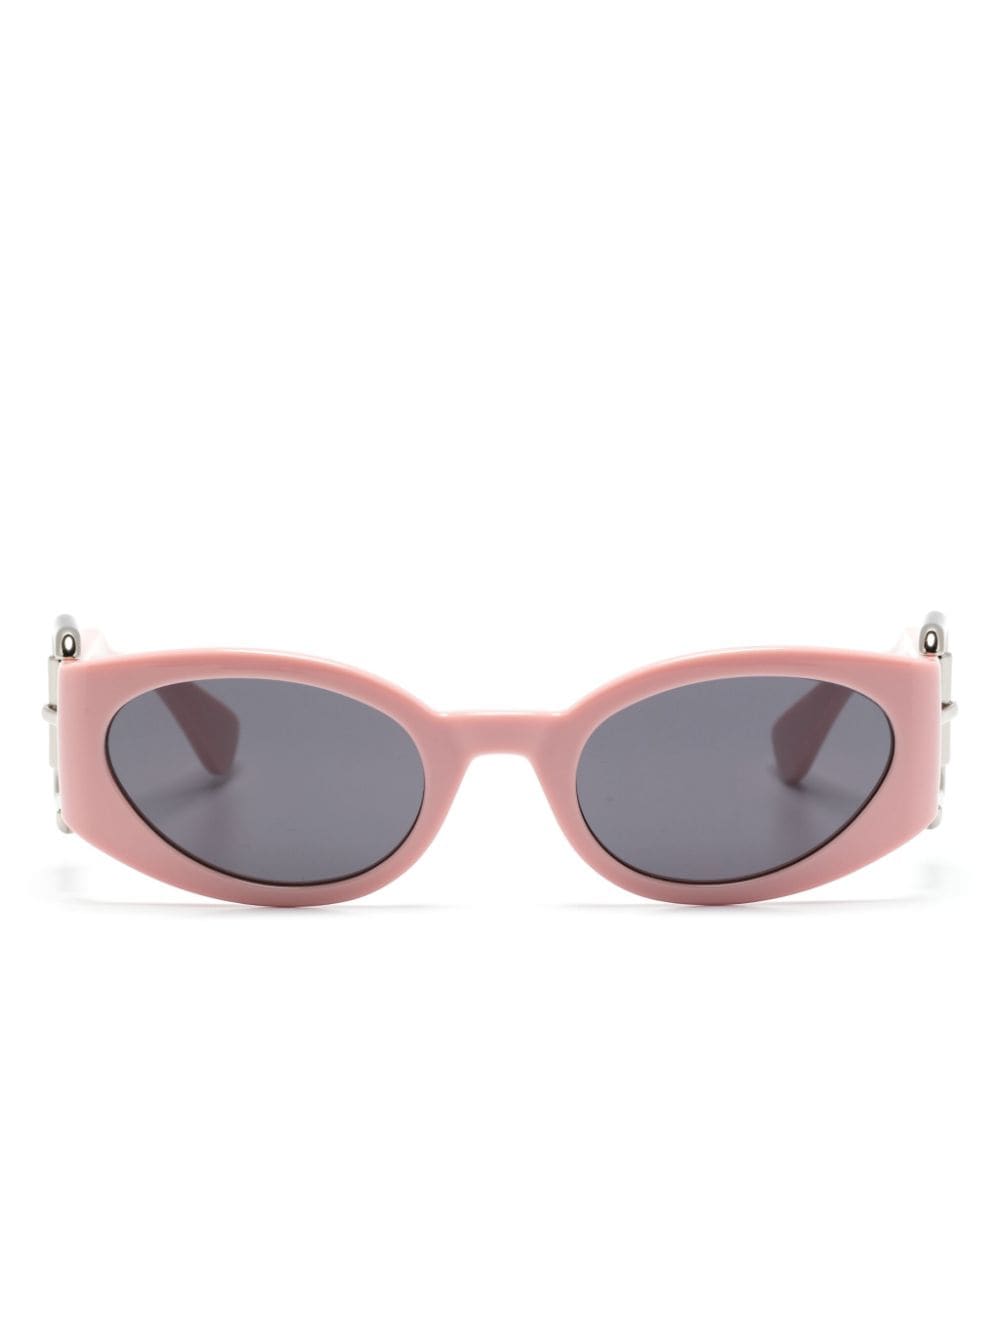 oval-frame buckle-detail sunglasses